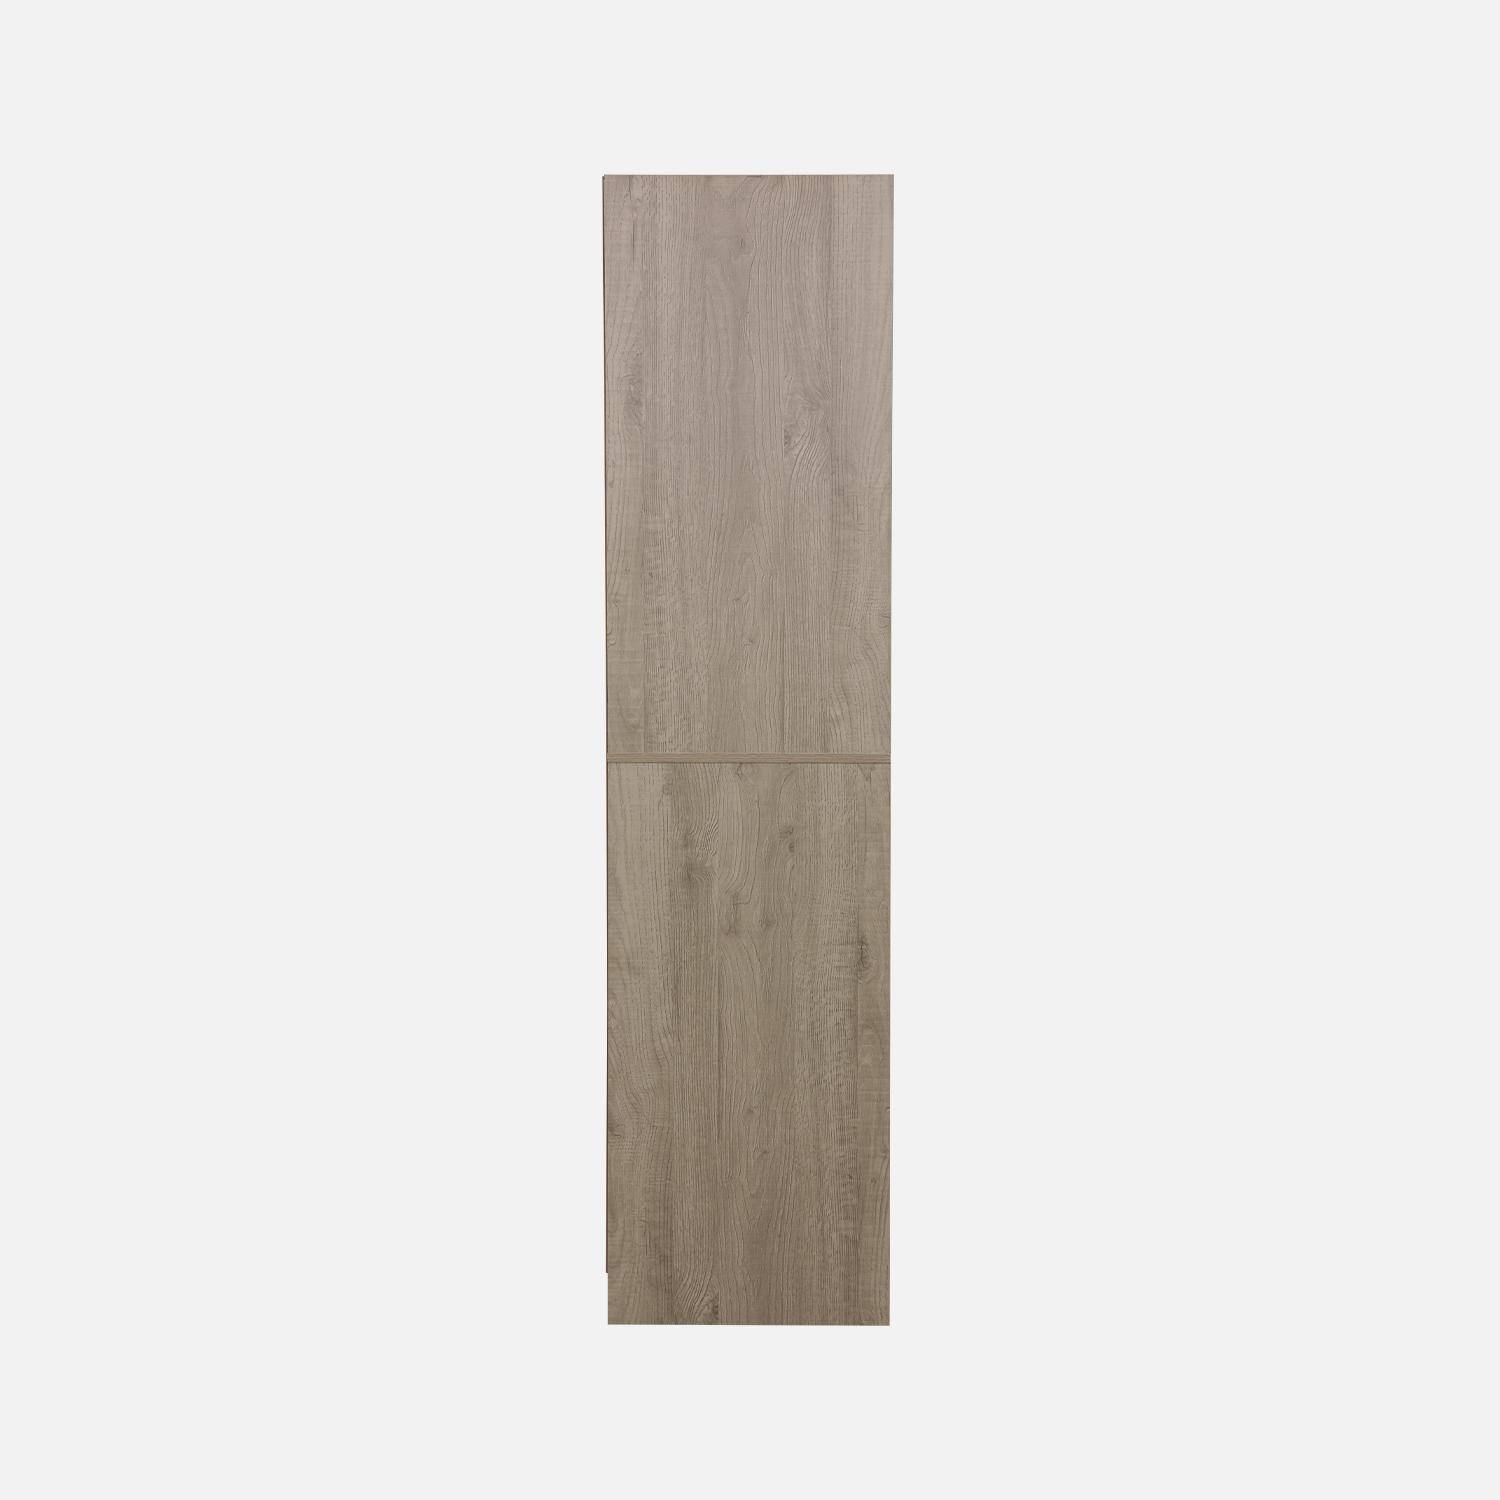 Kastenset, naturelhout kleurig, laminaat panelen, Modulo, 260x45x180cm Photo7